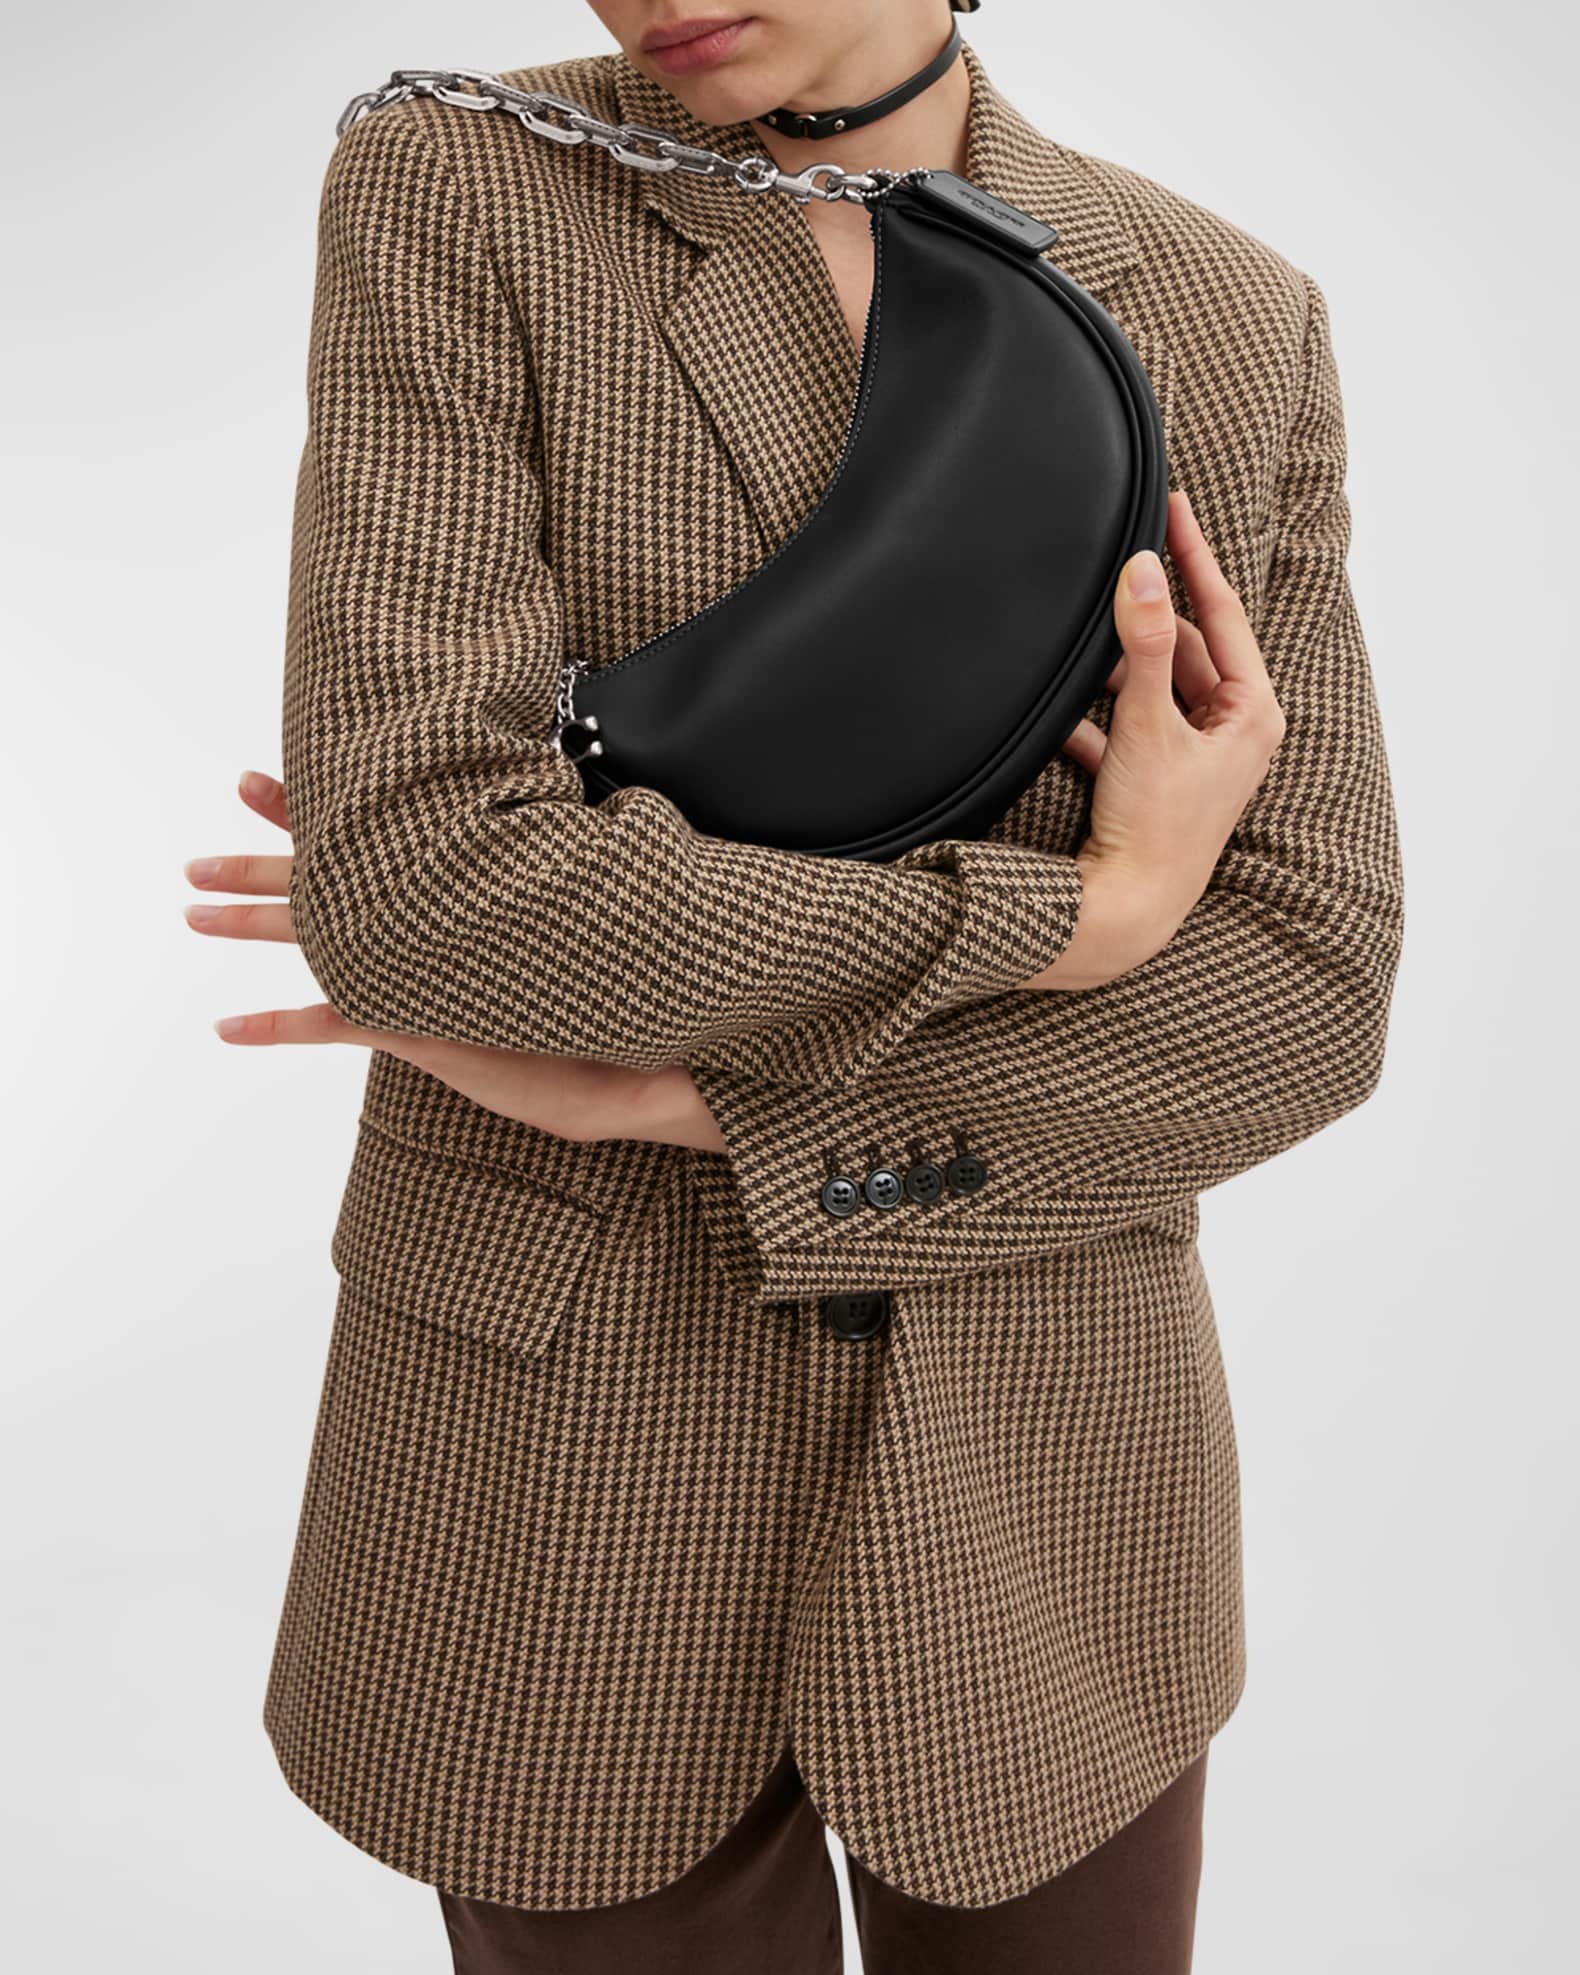 Coach Crescent Glovetanned Leather Shoulder Bag | Neiman Marcus